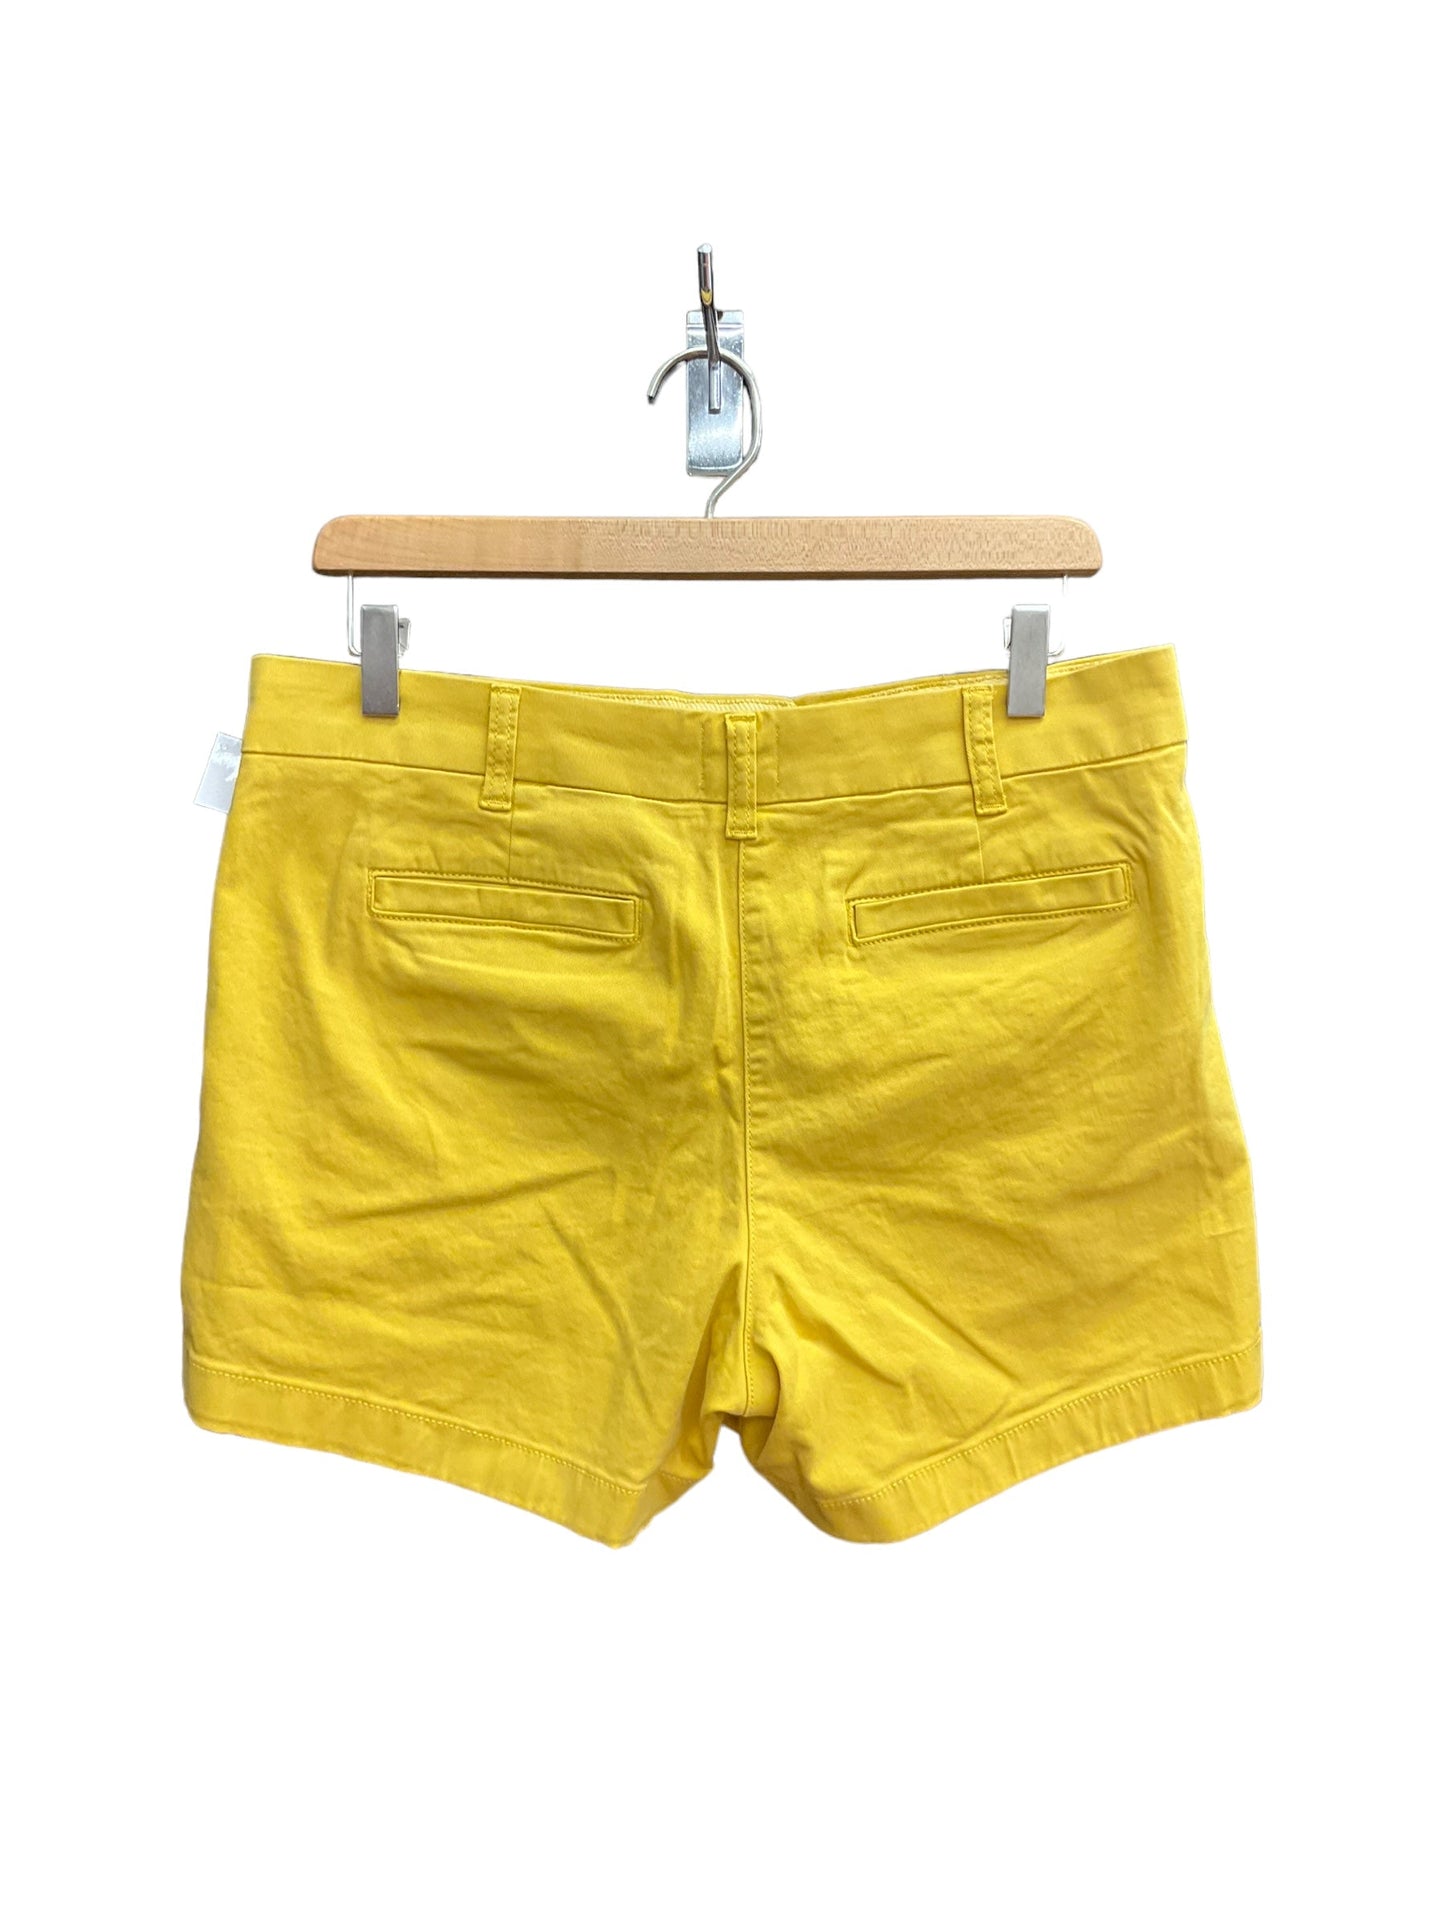 Yellow Shorts J. Crew, Size 8